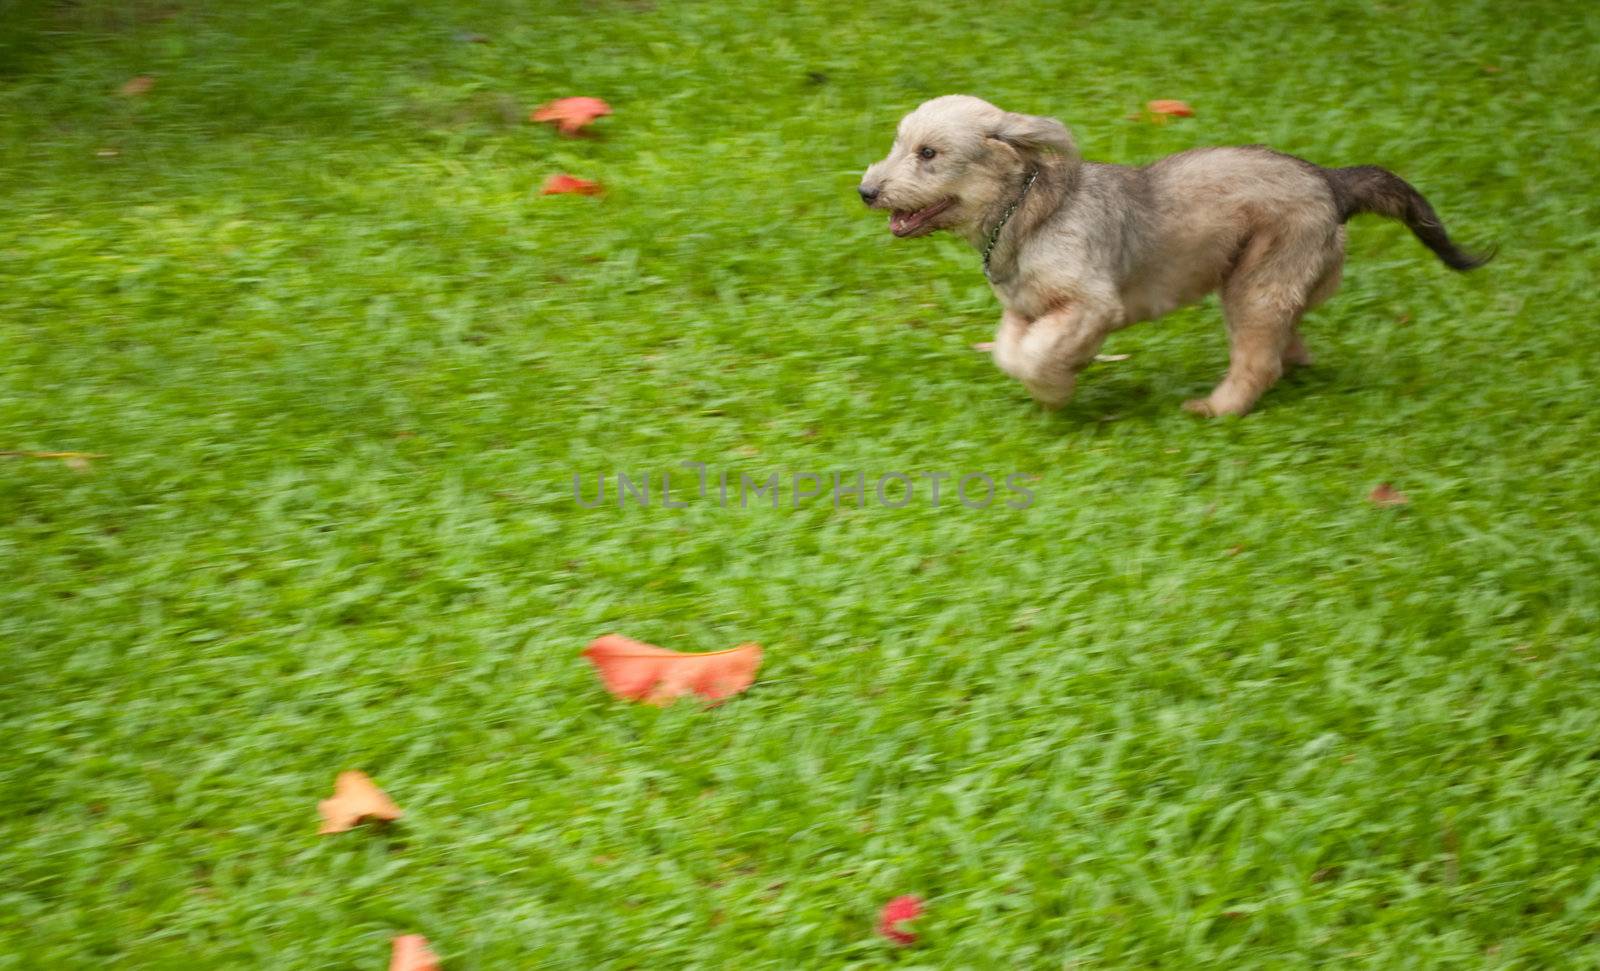 Cute puppy runnig by alvinb